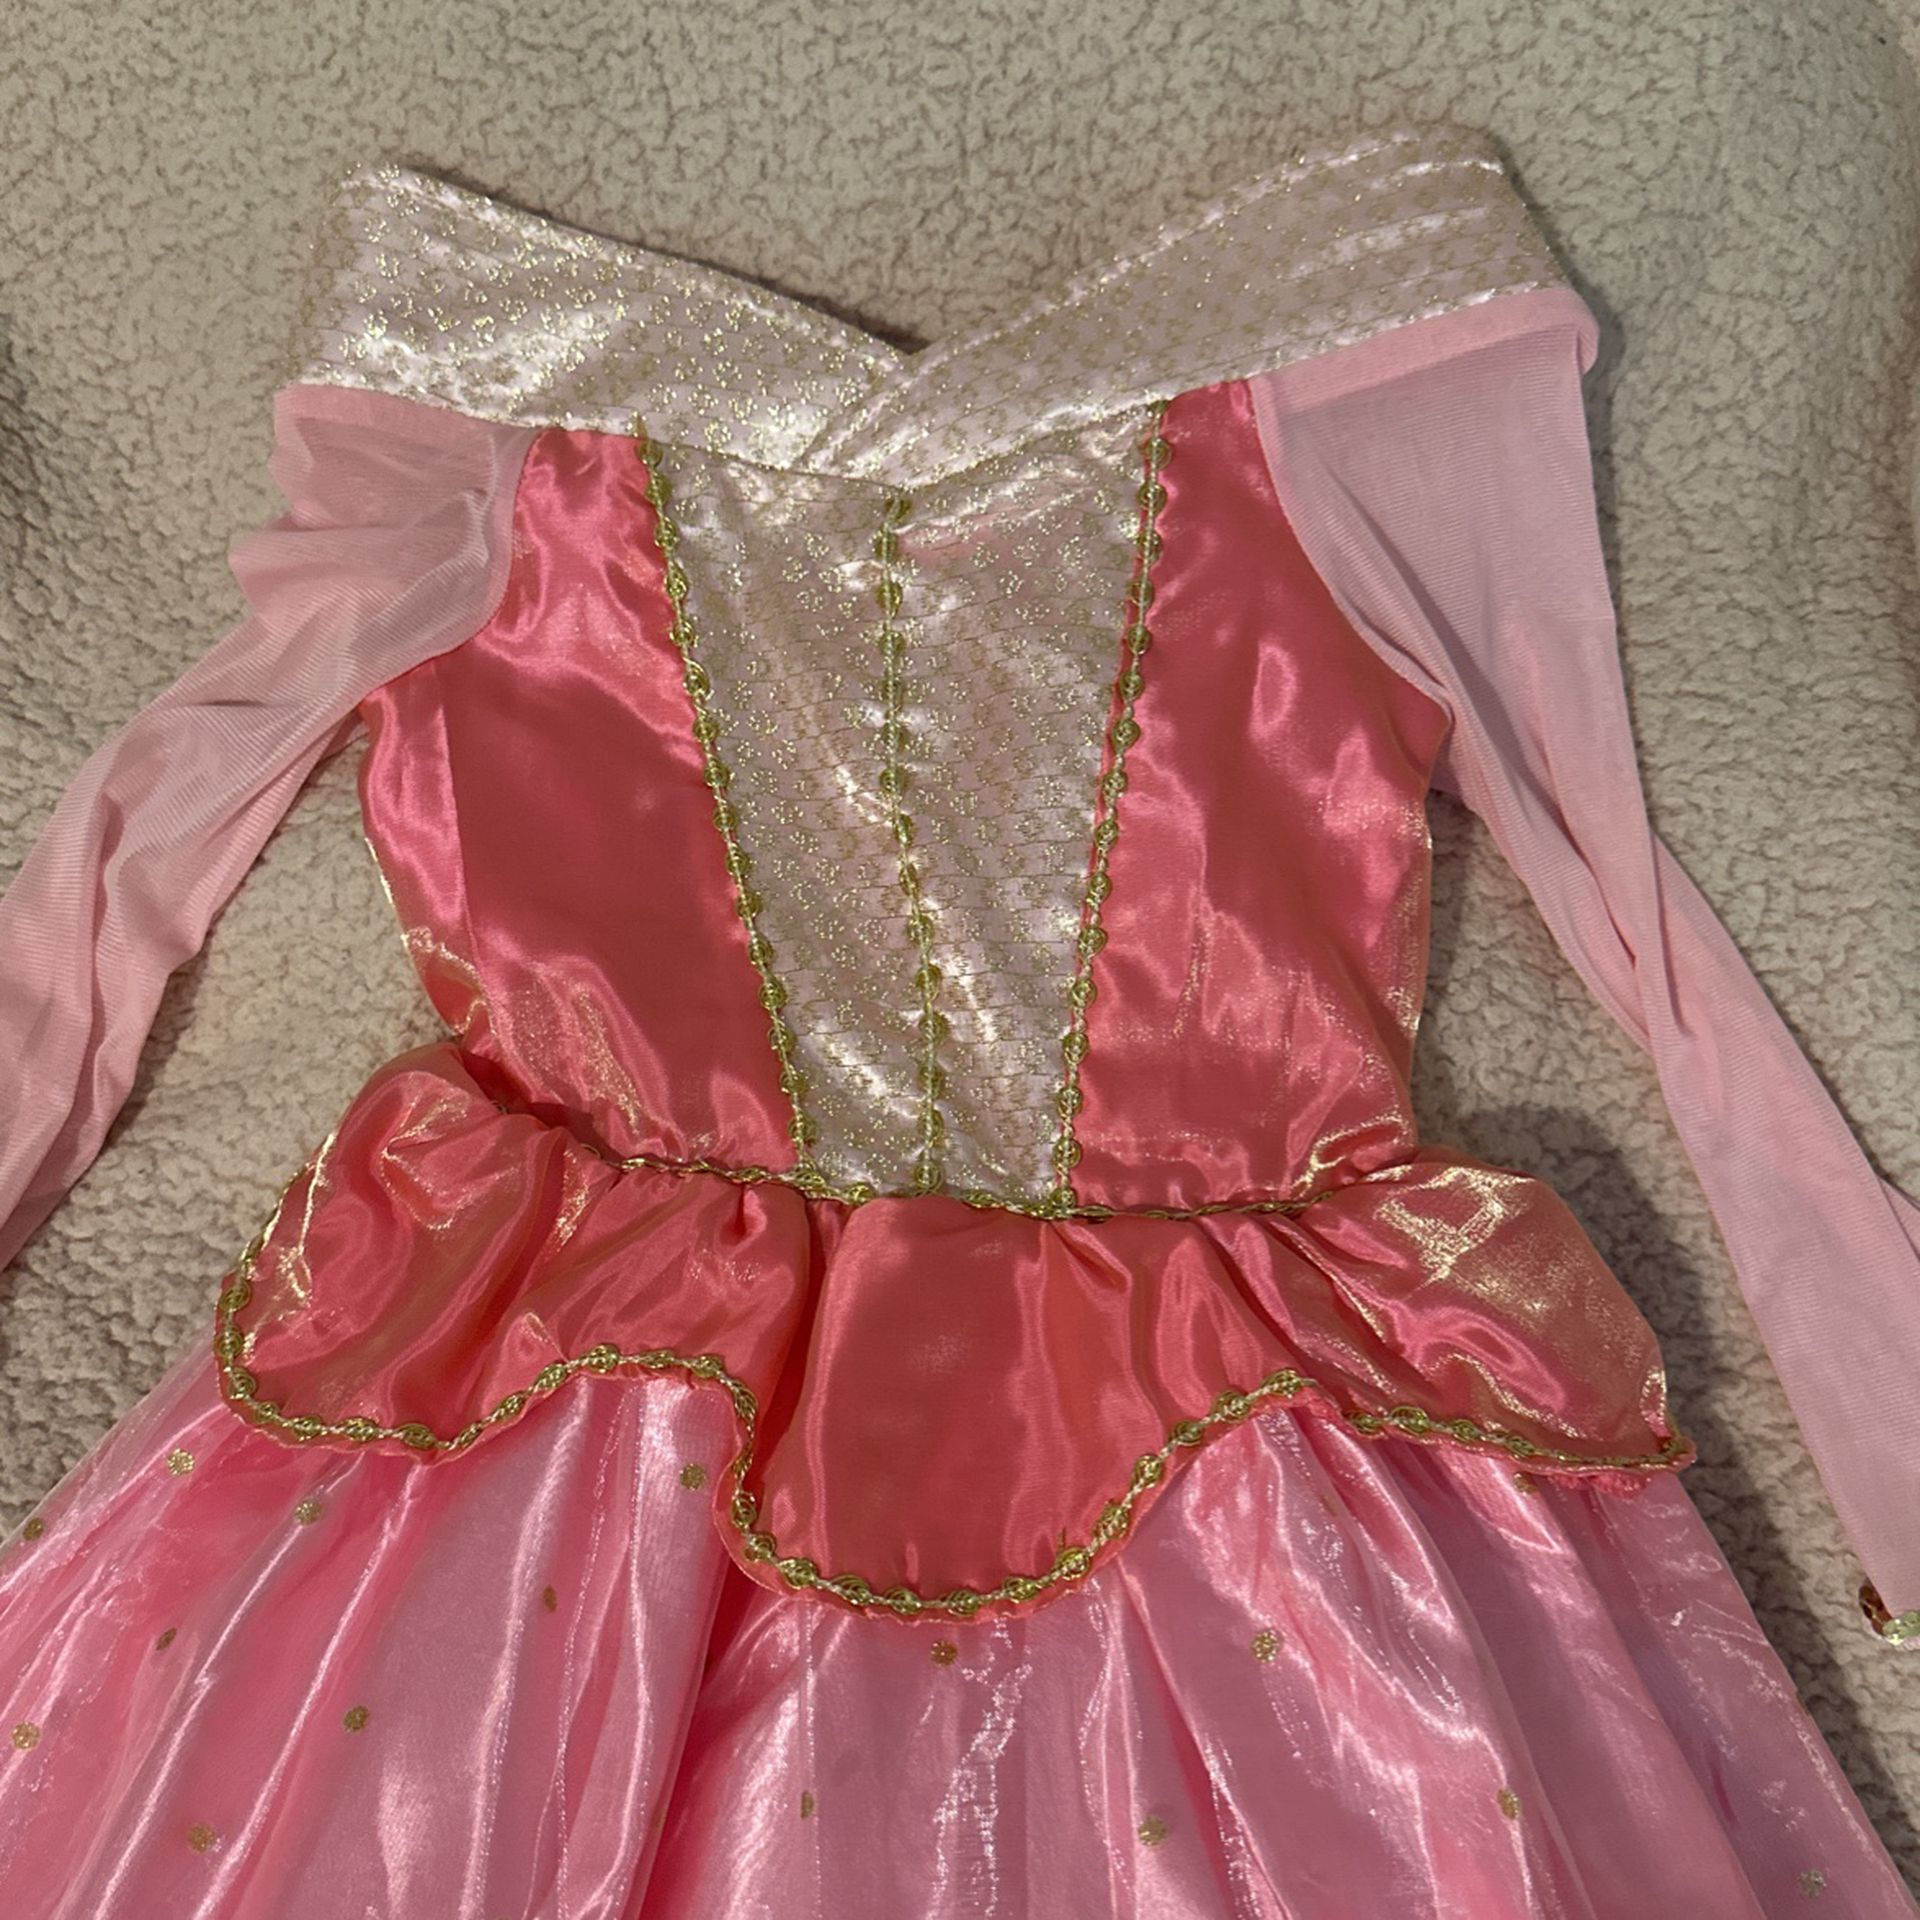 Costume for Sleeping Beauty